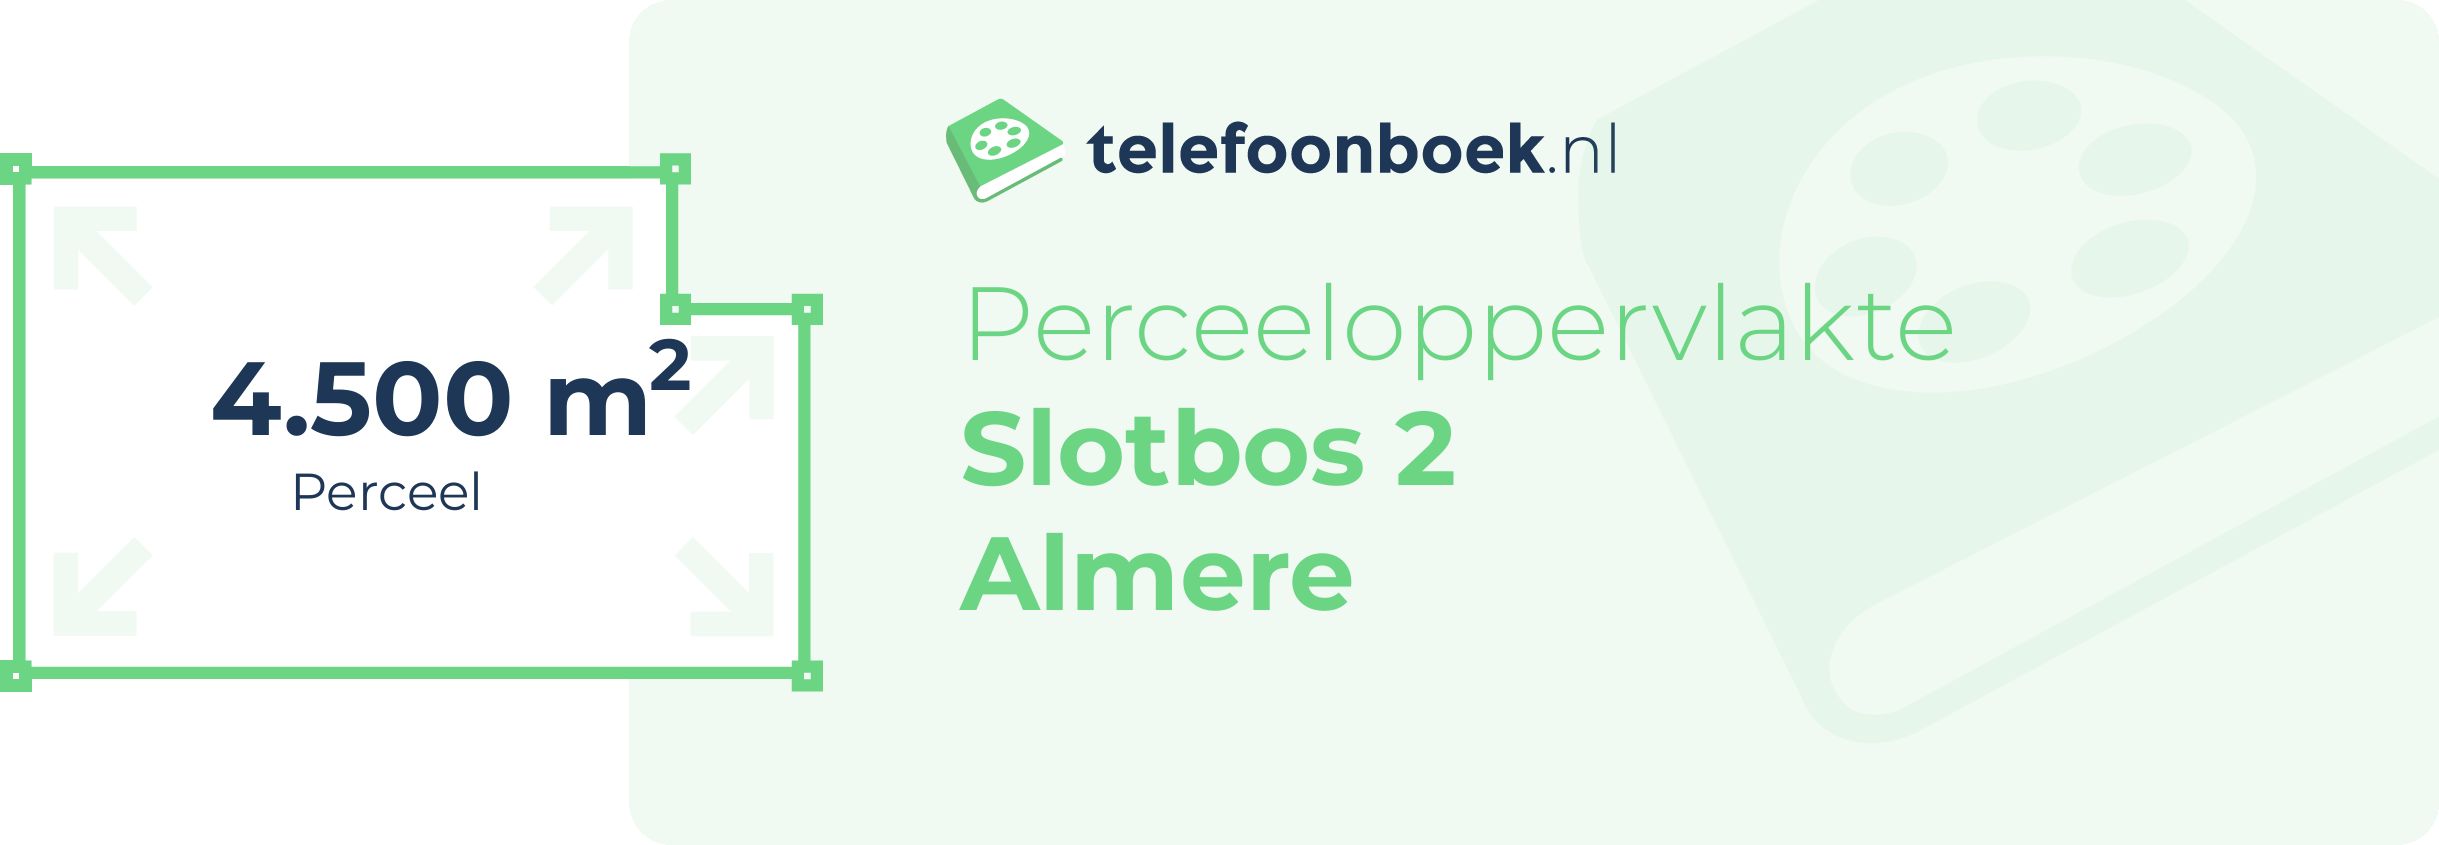 Perceeloppervlakte Slotbos 2 Almere